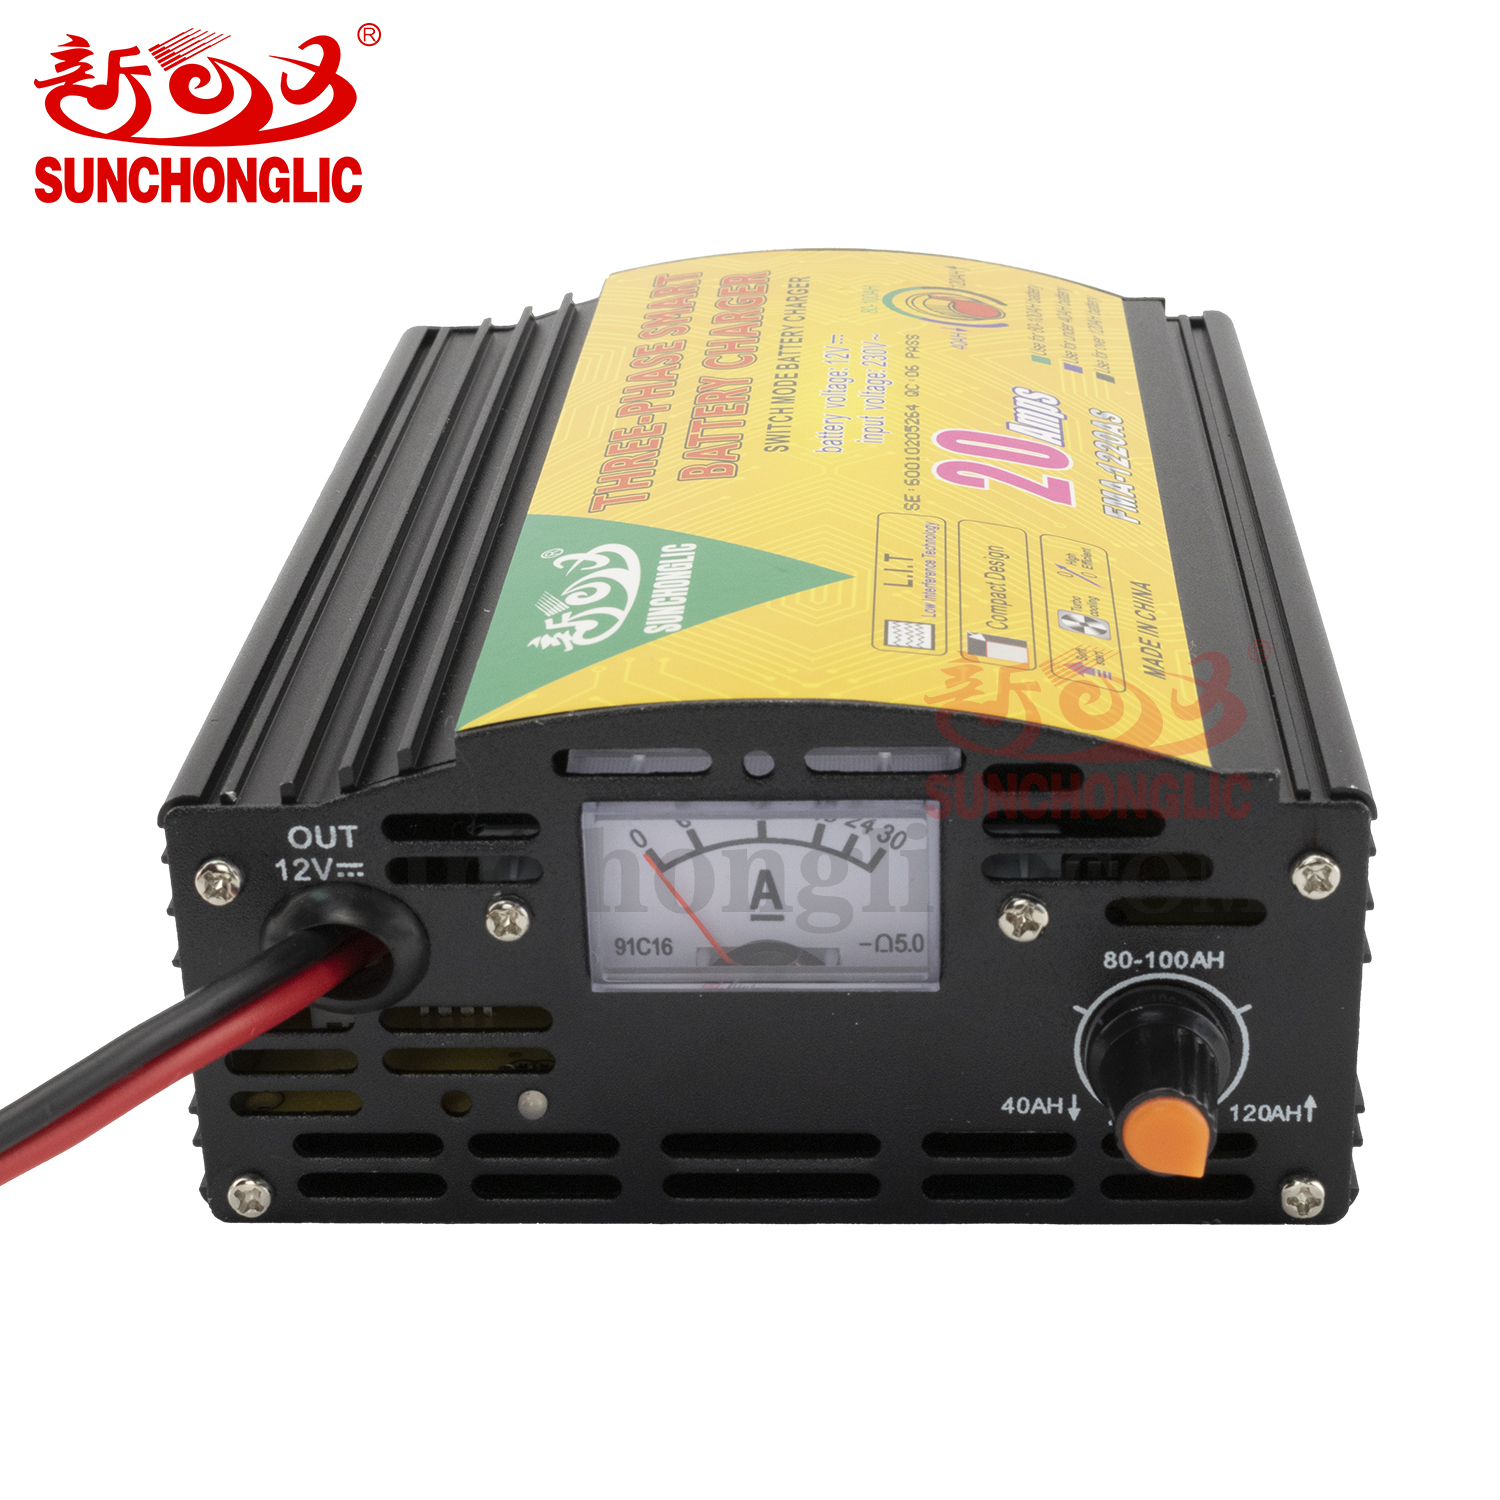 FMA-1220AS - AGM/GEL Battery Charger - Foshan Sunchonglic Electric